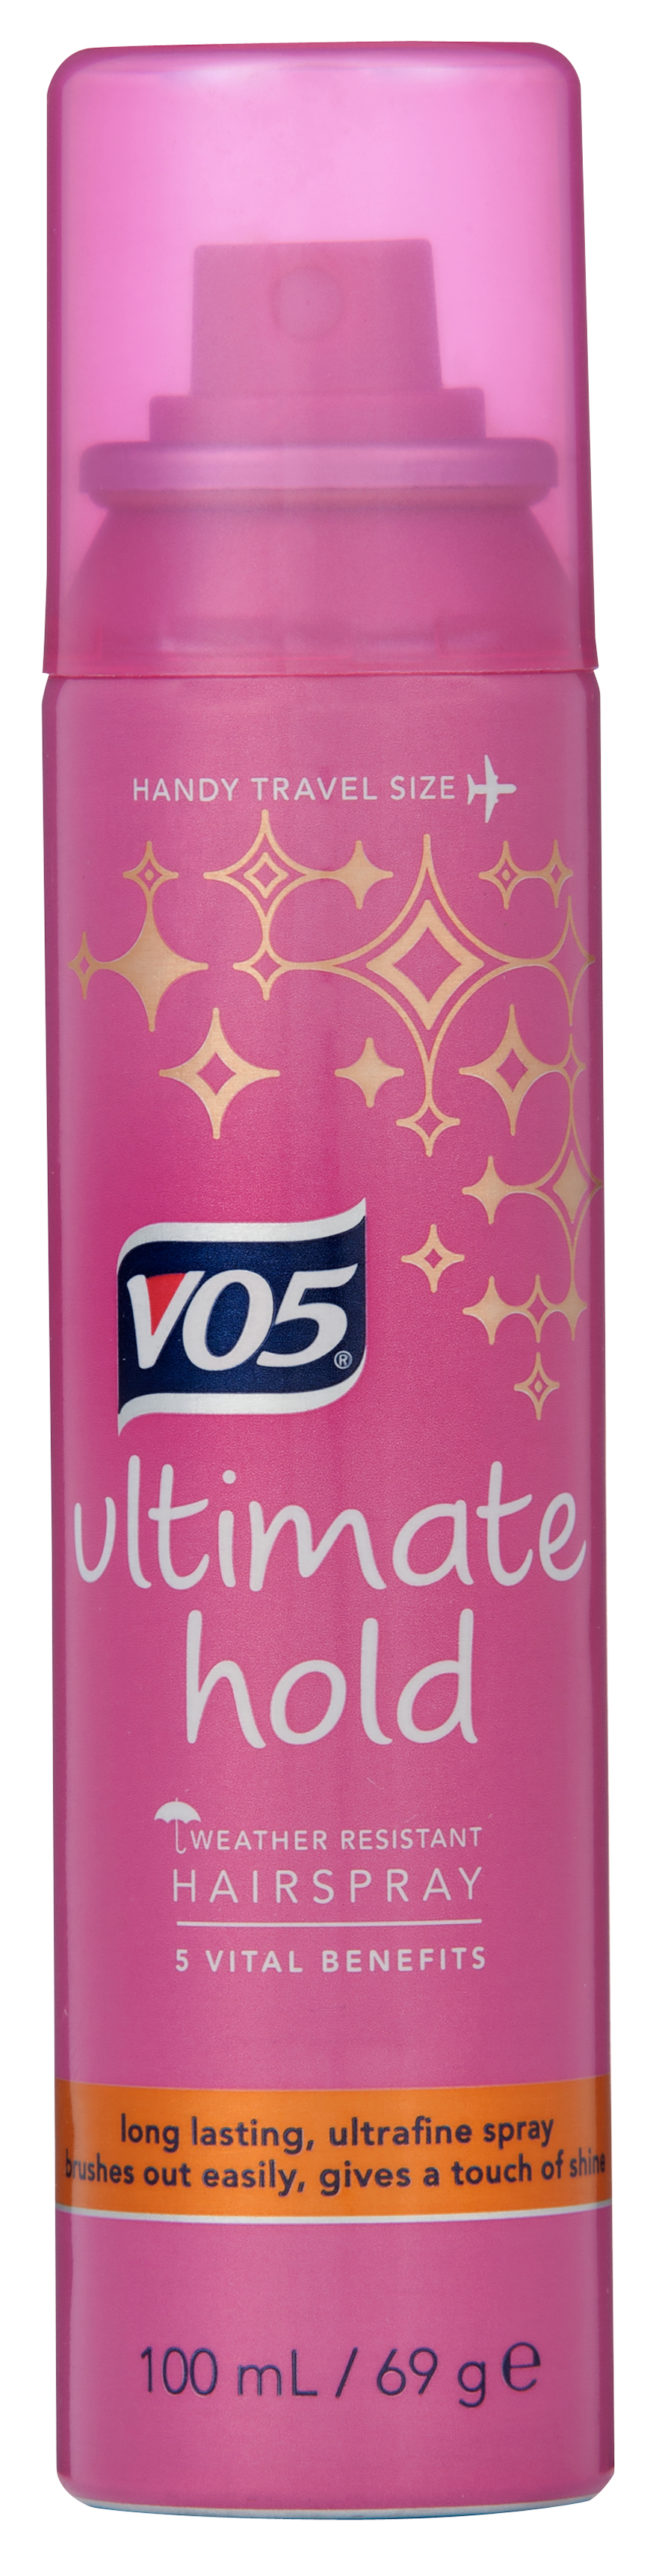 VO5 Ultimate Hold Hairspray 100ML, RRP $4.29